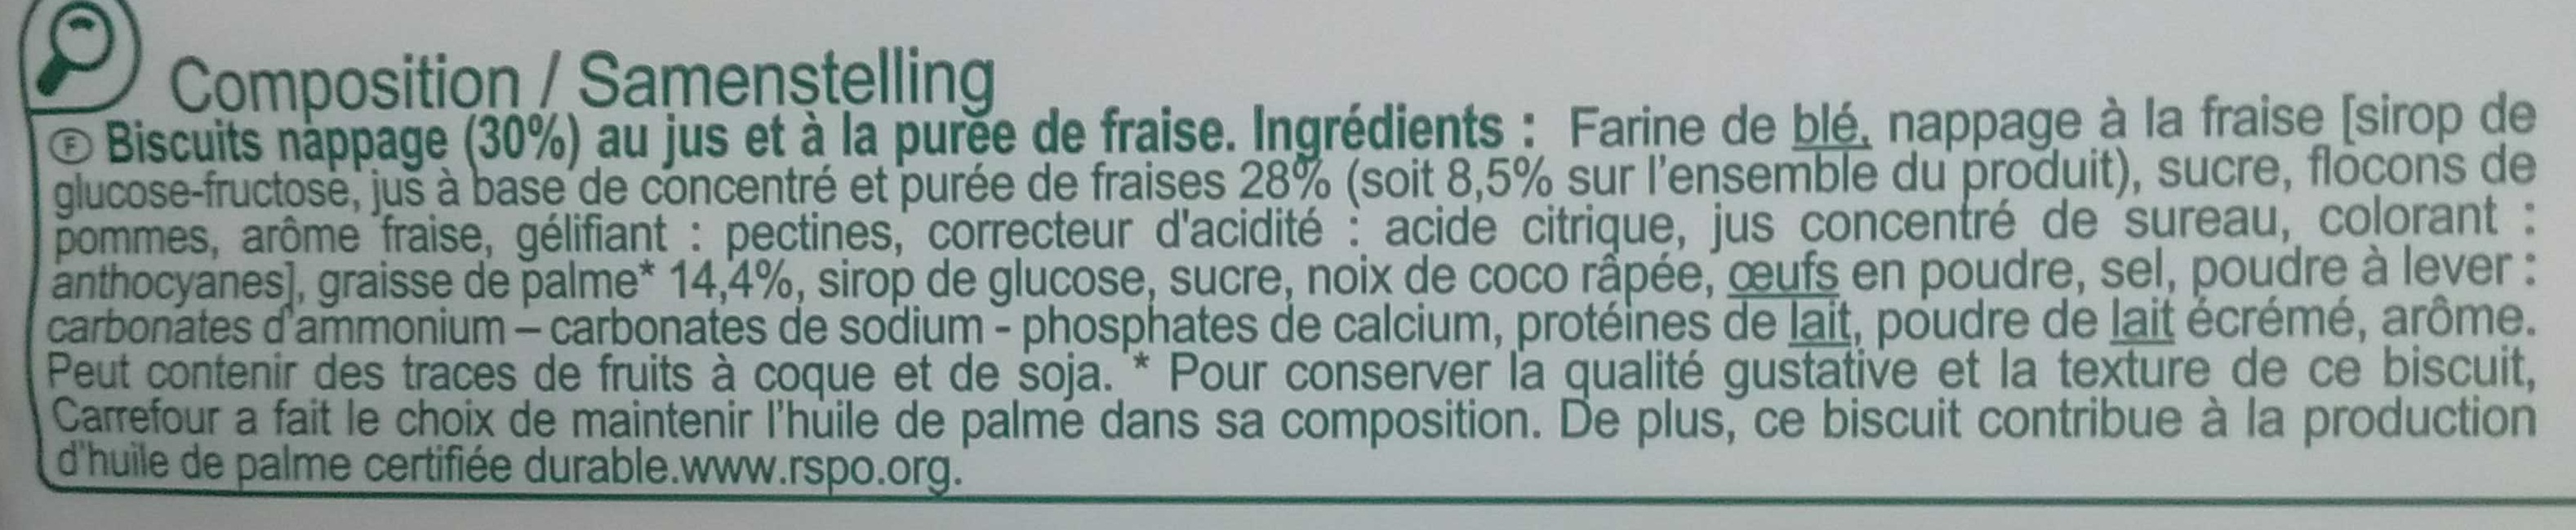 Biscuits tartelettes fraise - Ingredients - fr